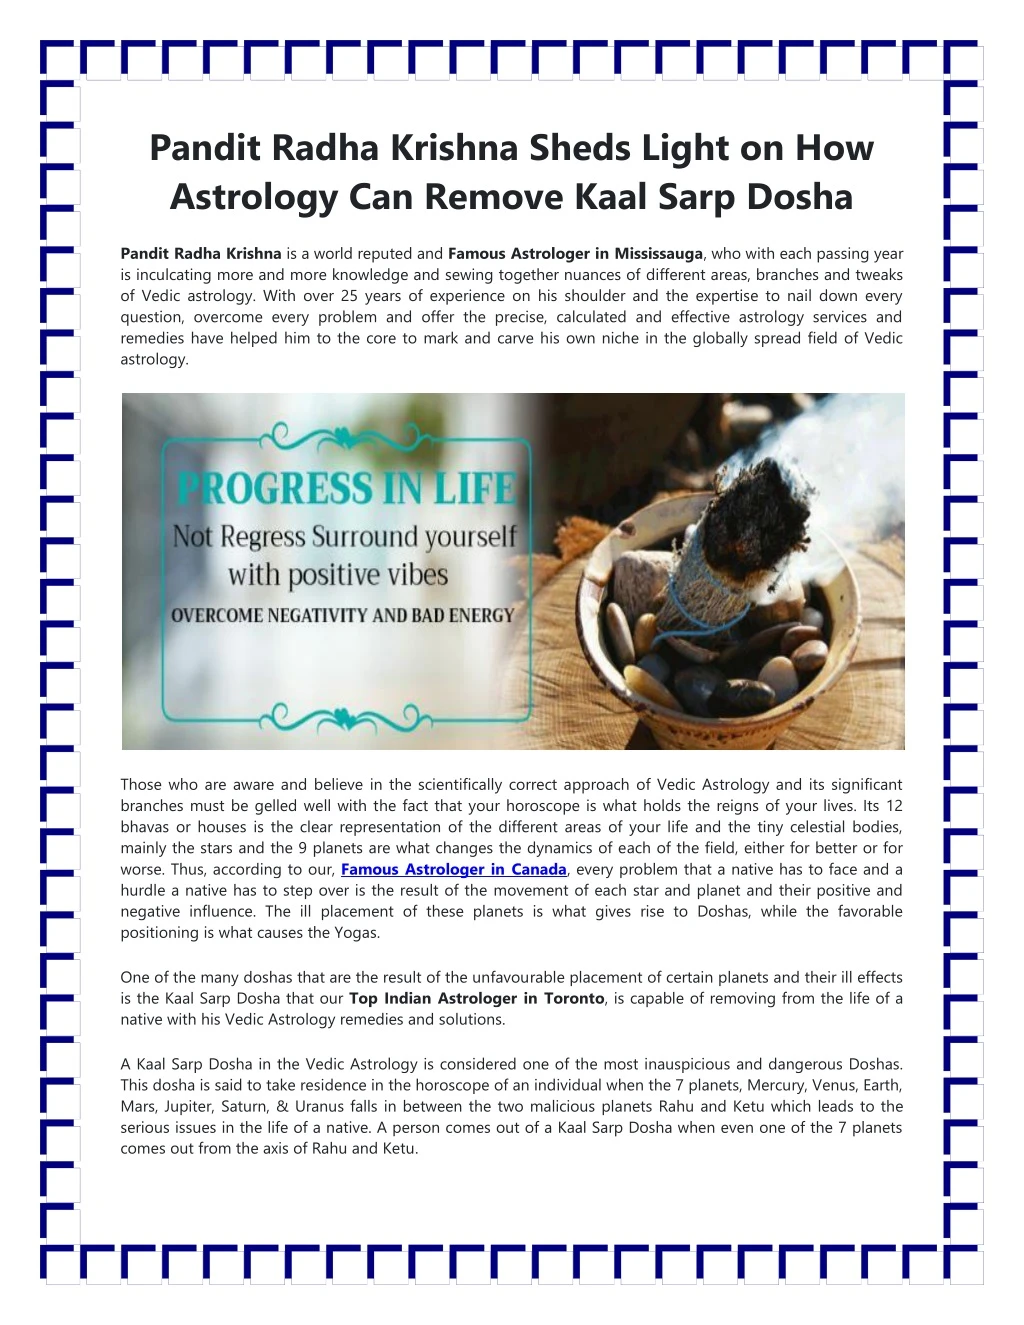 pandit radha krishna sheds light on how astrology